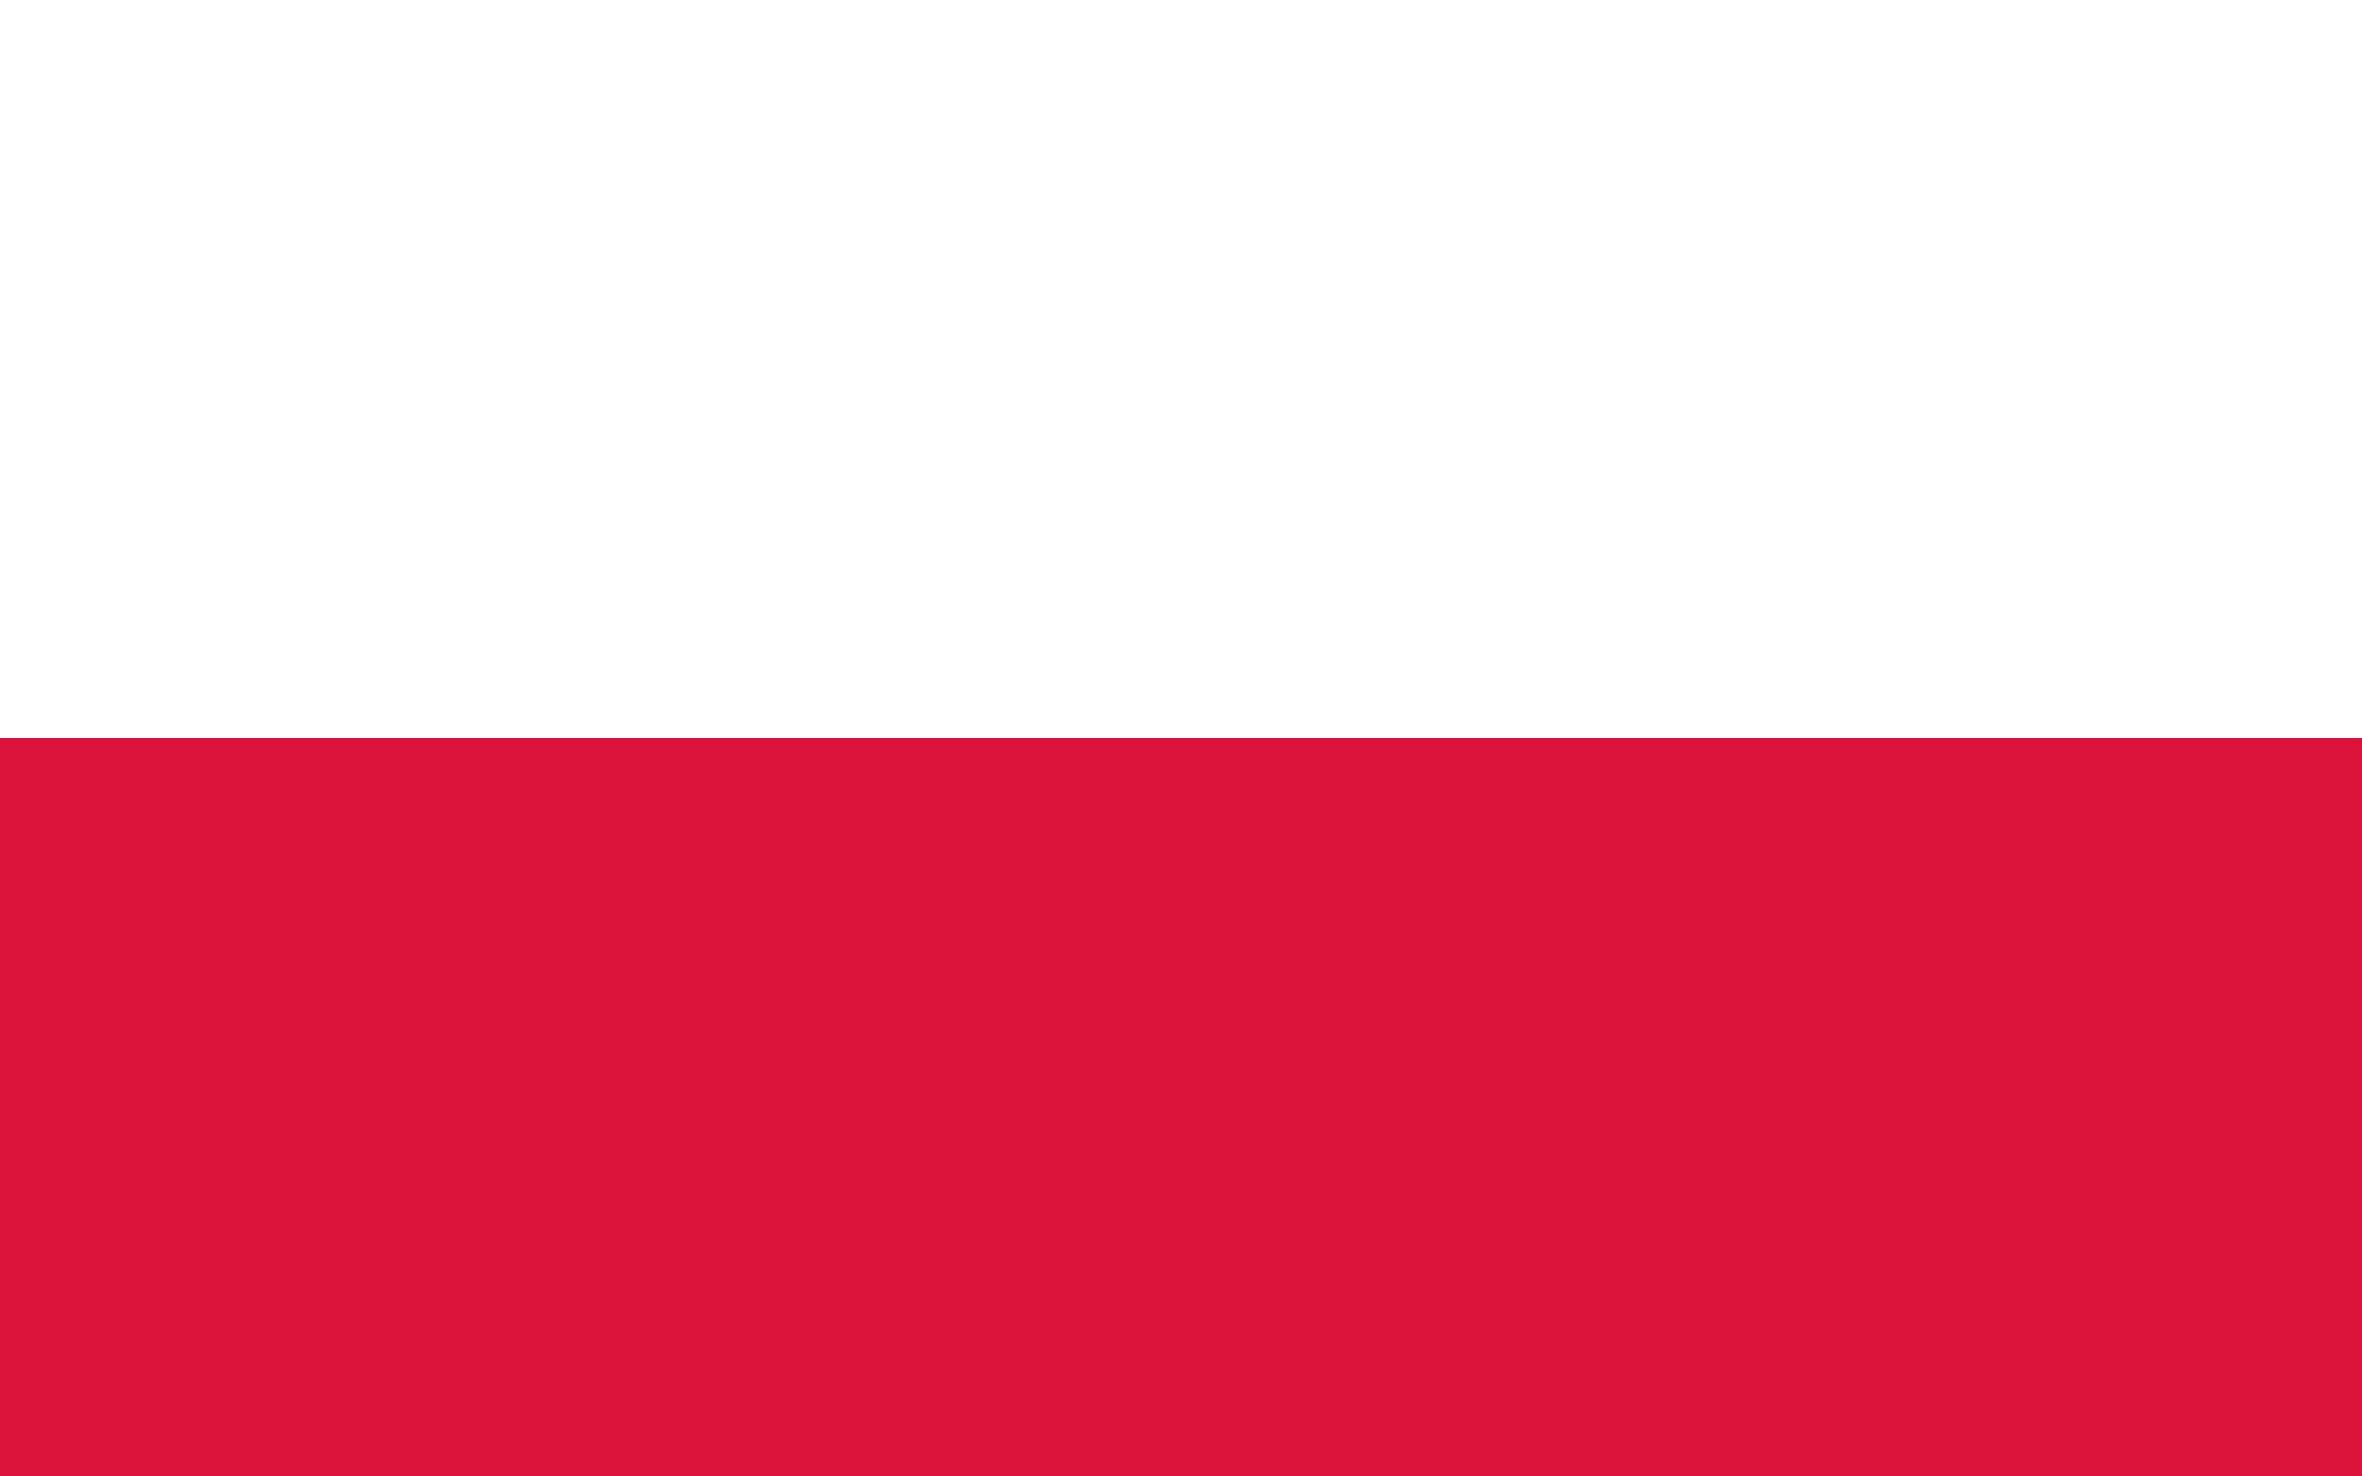 File:Flag of Poland (bordered